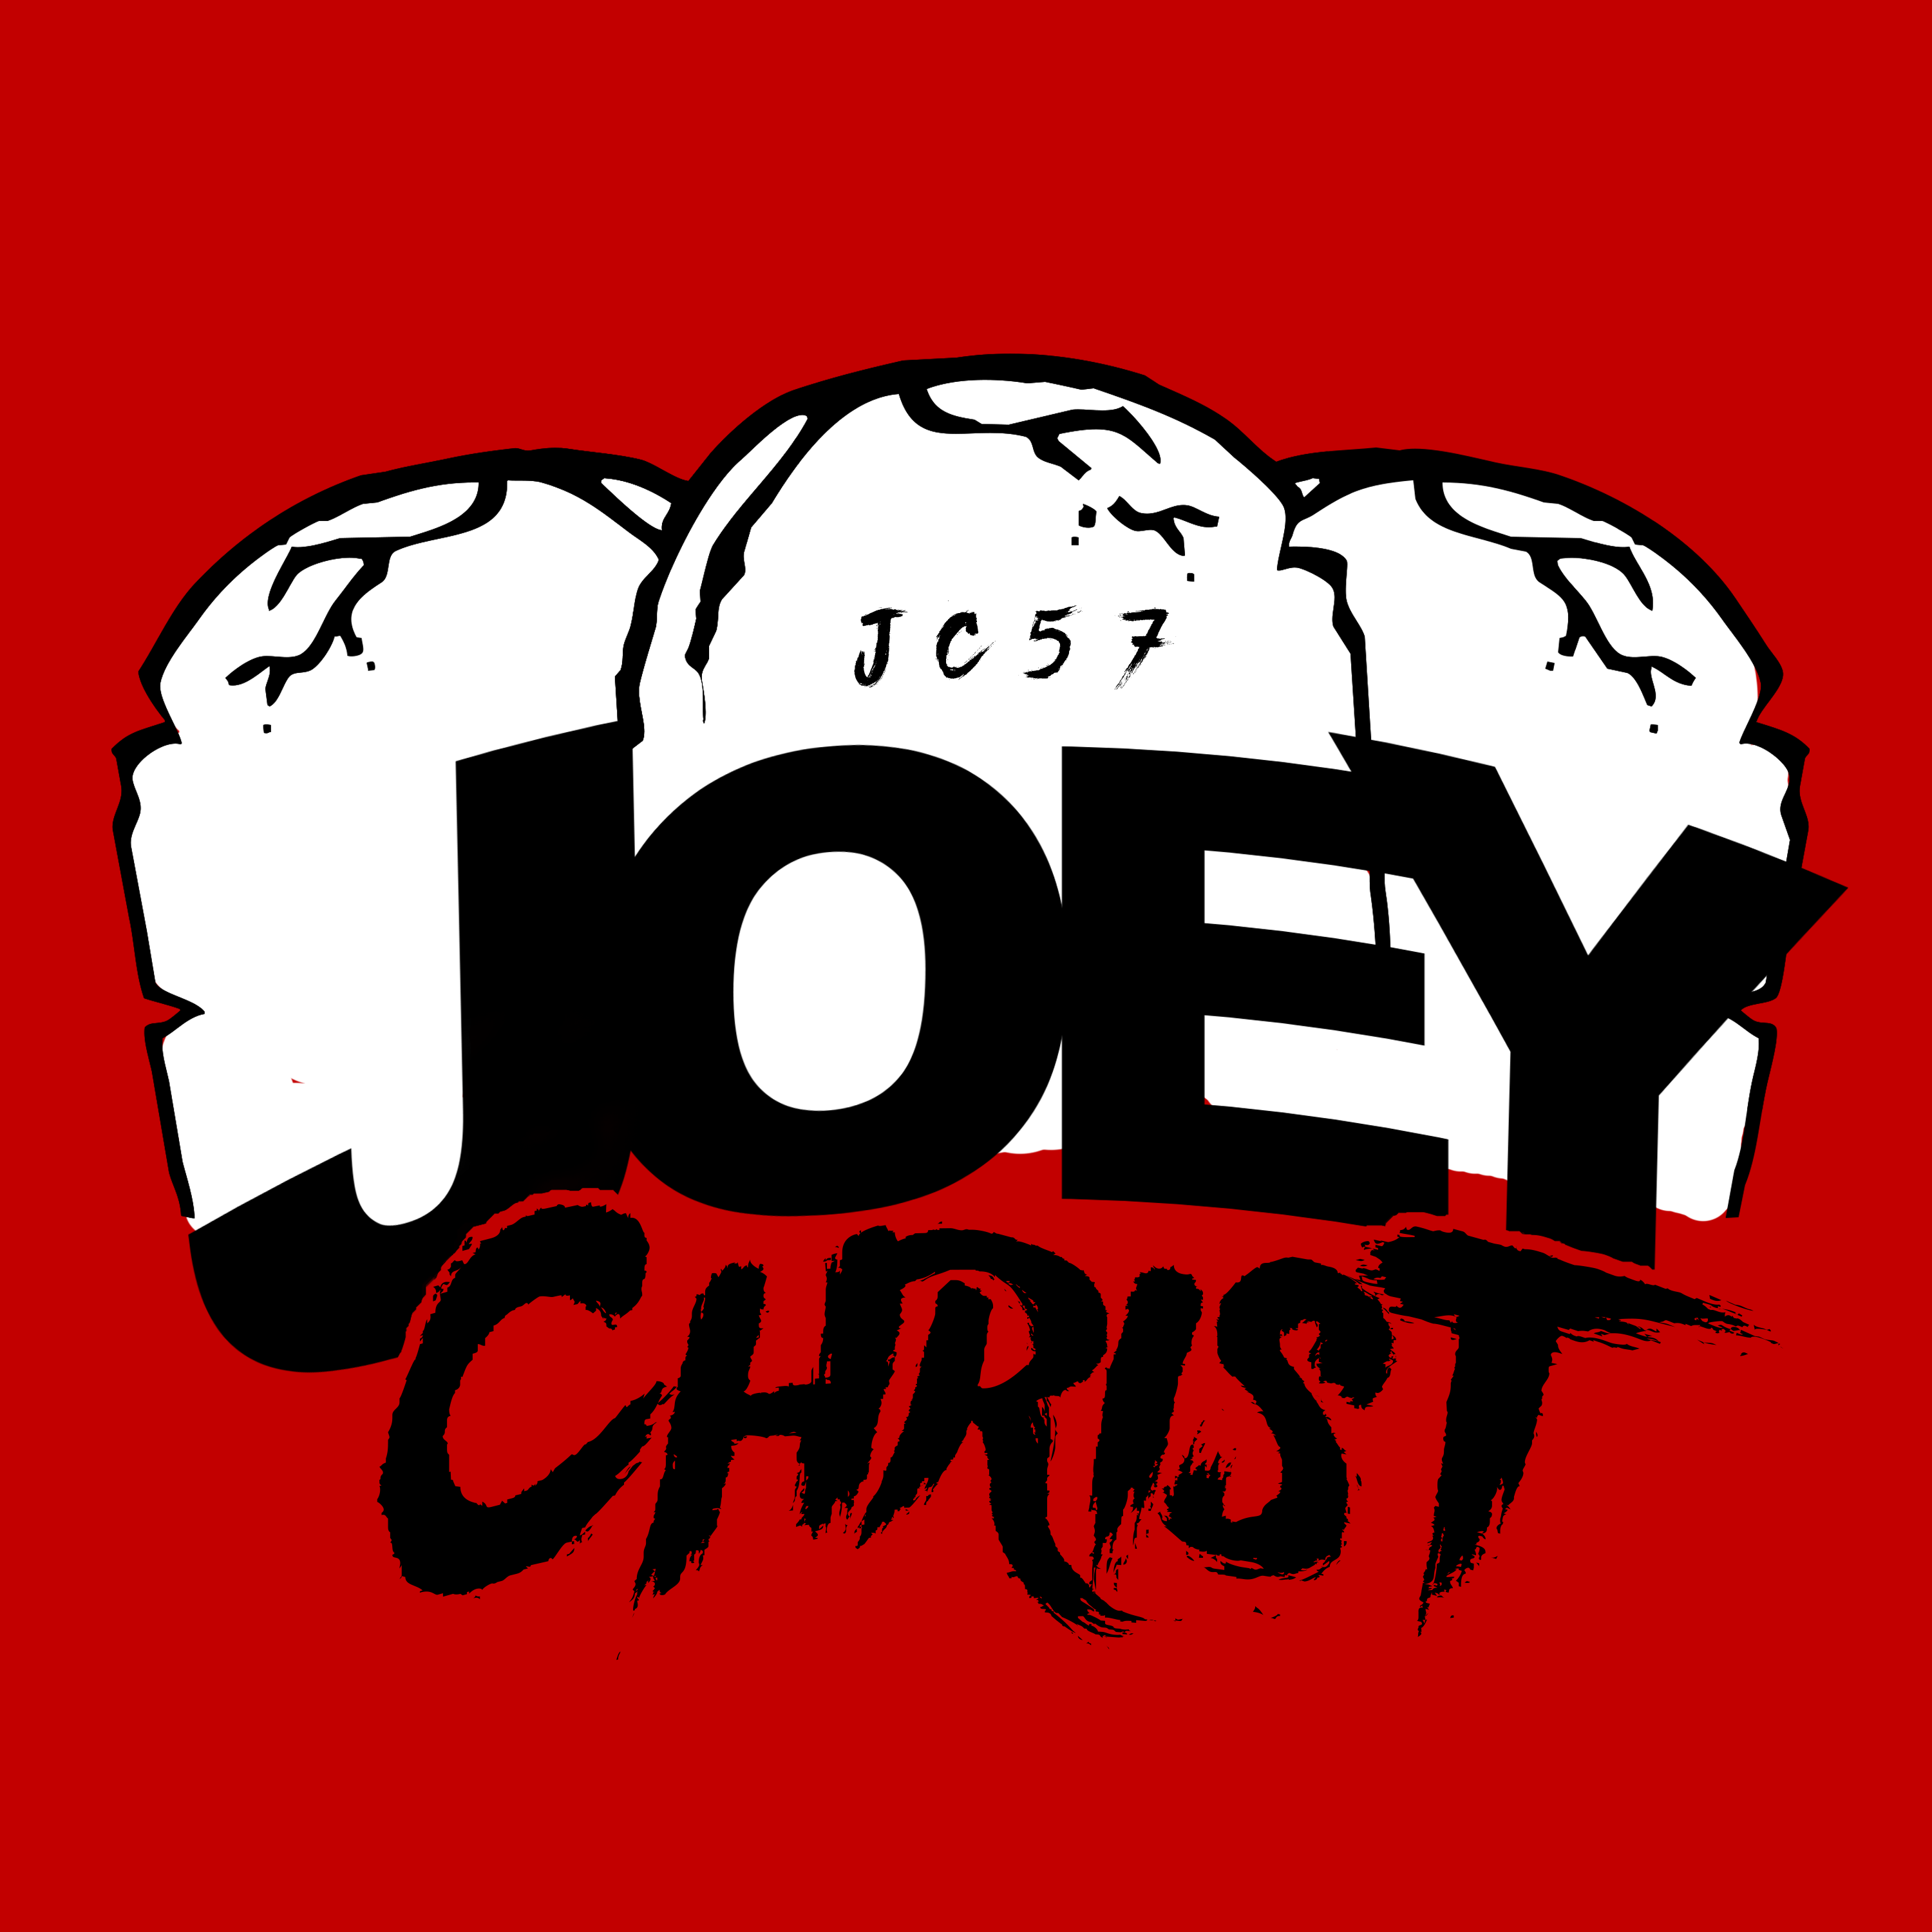 Joey Christ